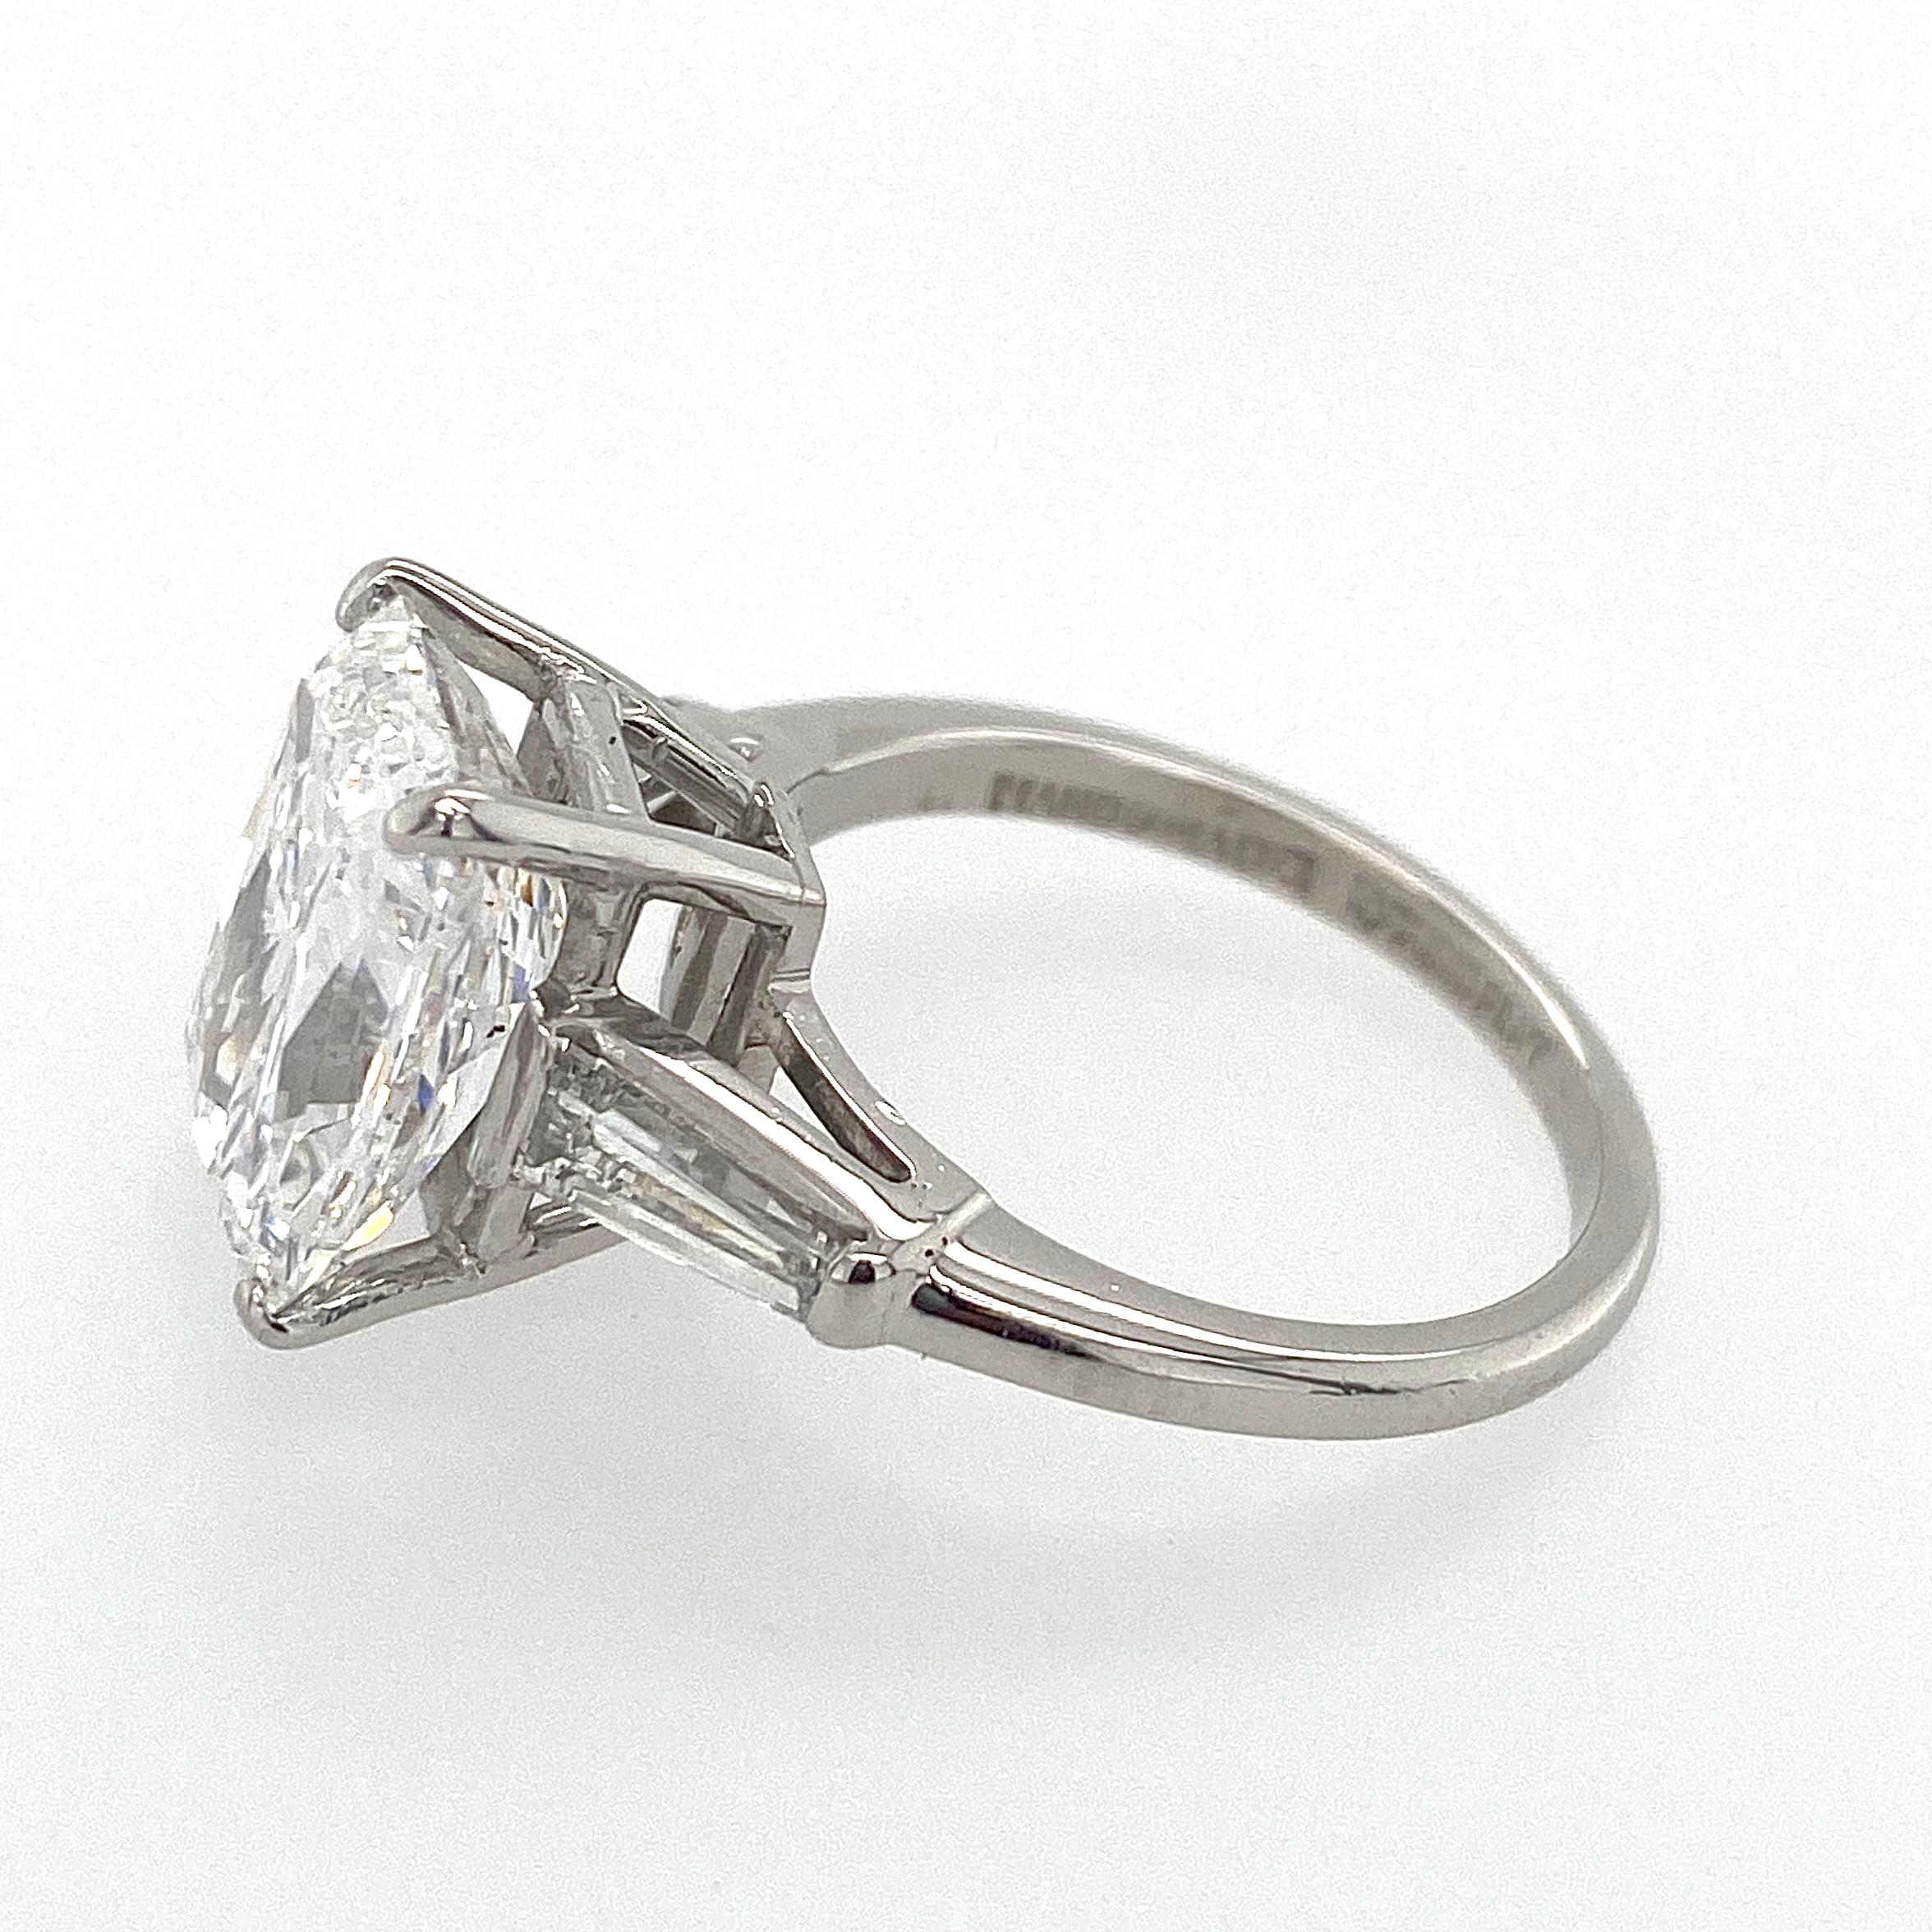 4.06 Carat E-VVS1 GIA Certified Radiant Cut Diamond in Deco-Era Platinum Ring 10